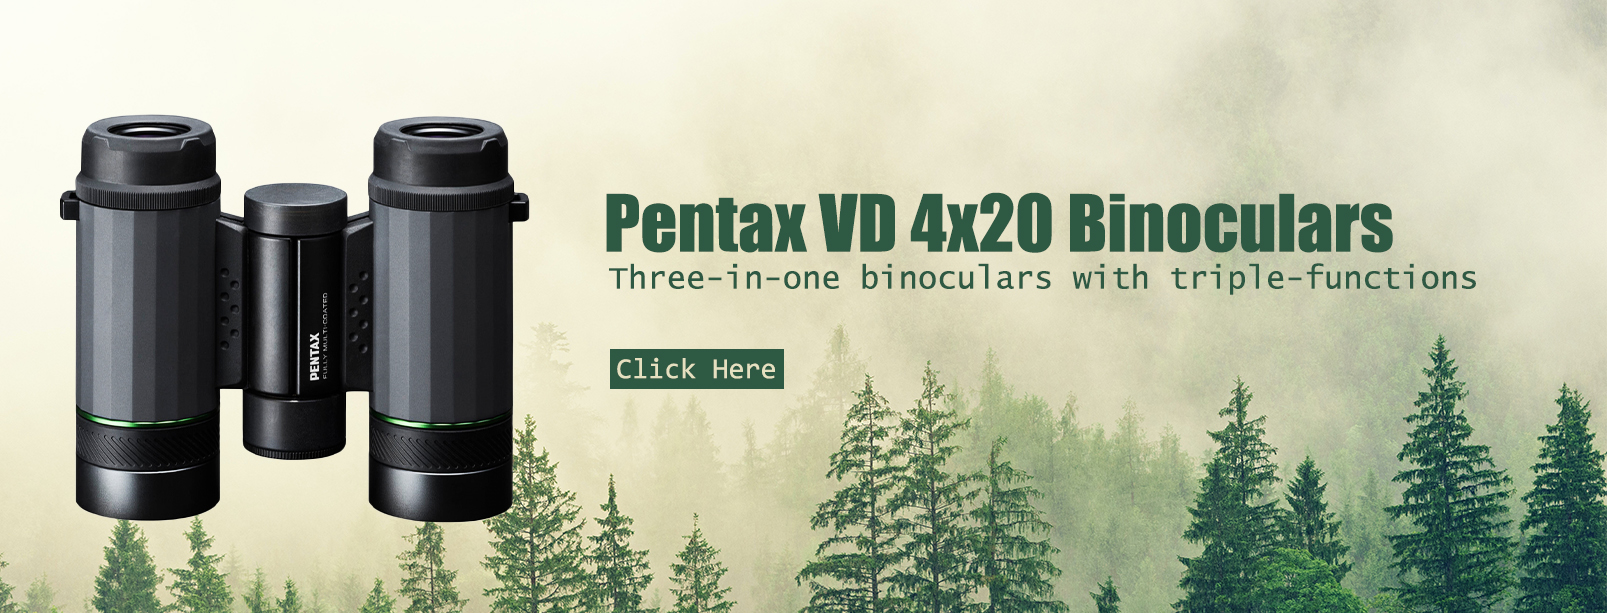 Pentax VD 4x20